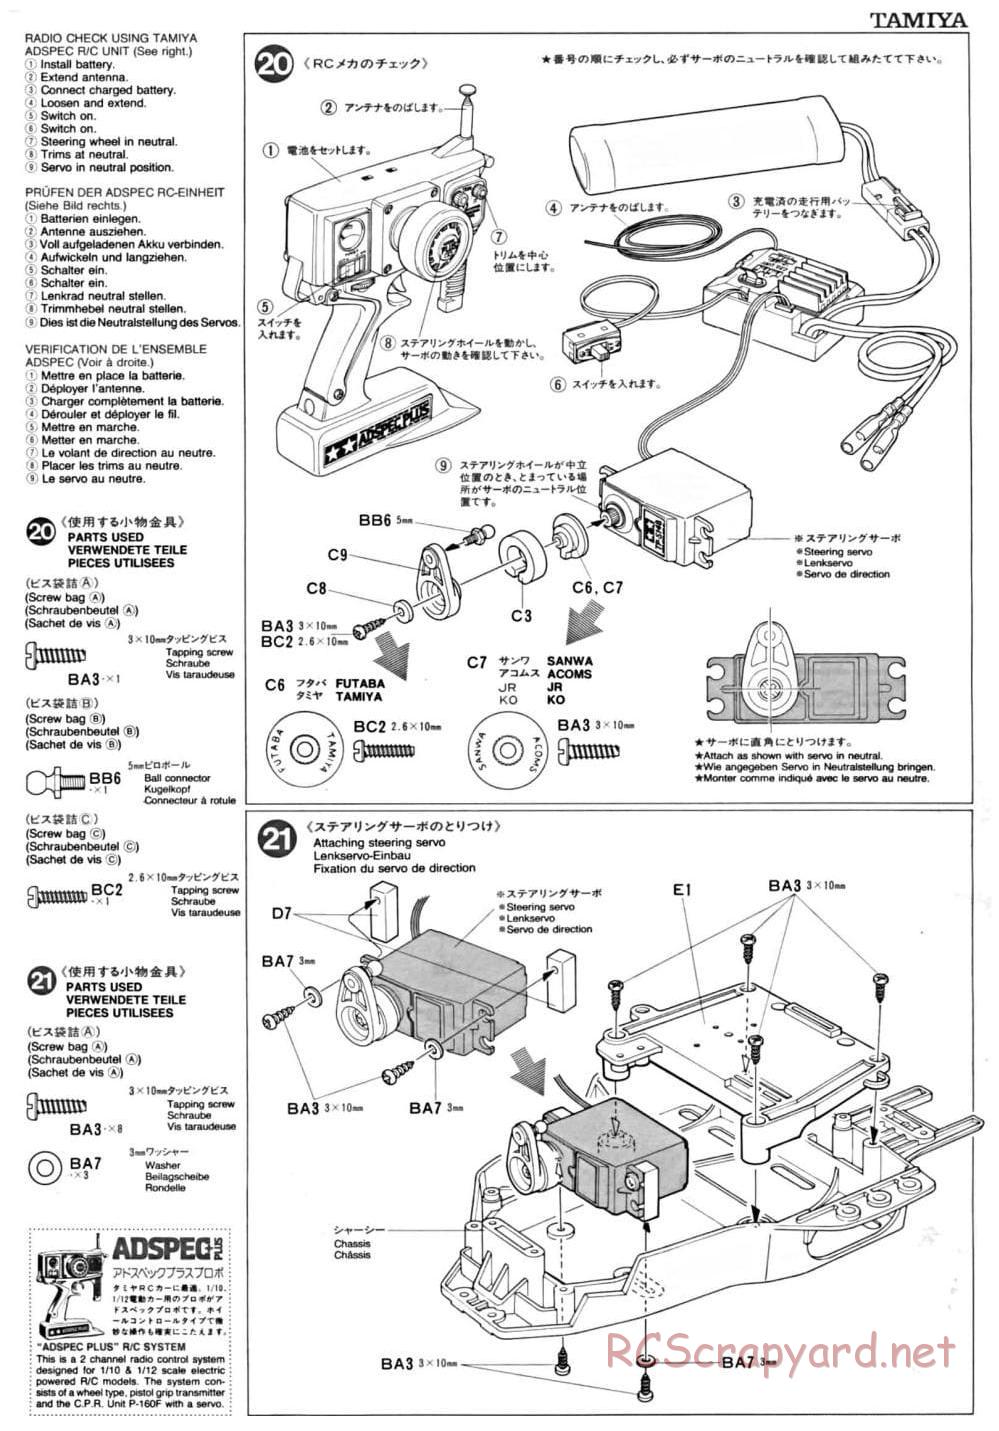 Tamiya - FF-01 Chassis - Manual - Page 11